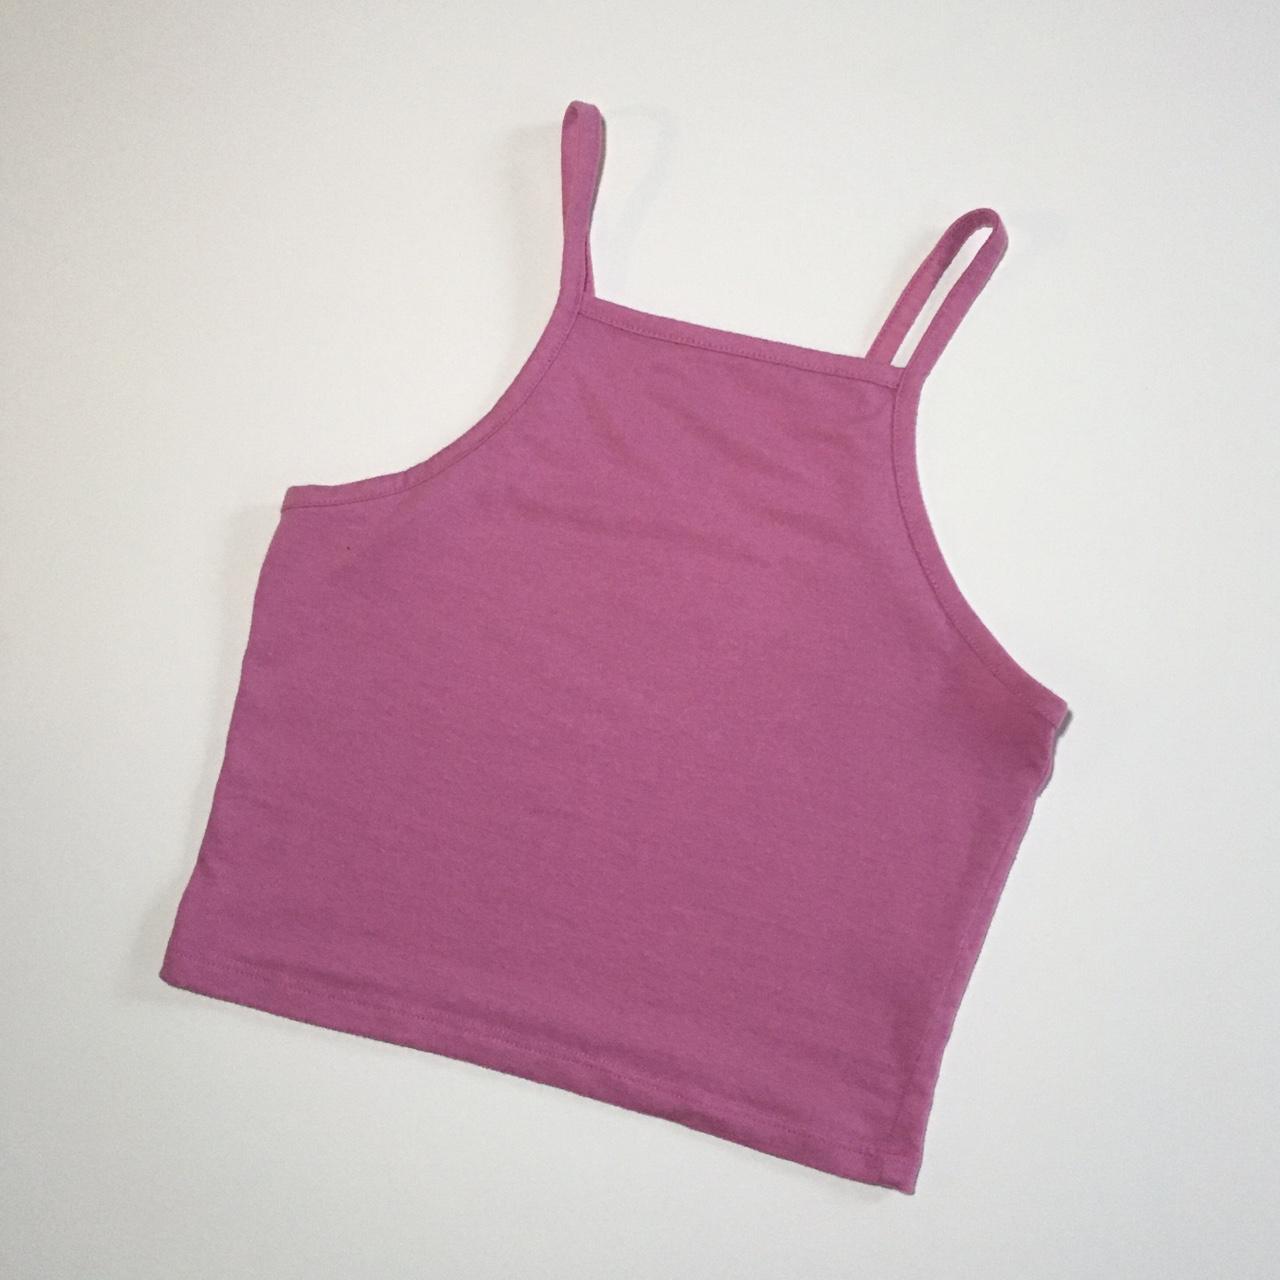 PacSun Women's Pink Vests-tanks-camis